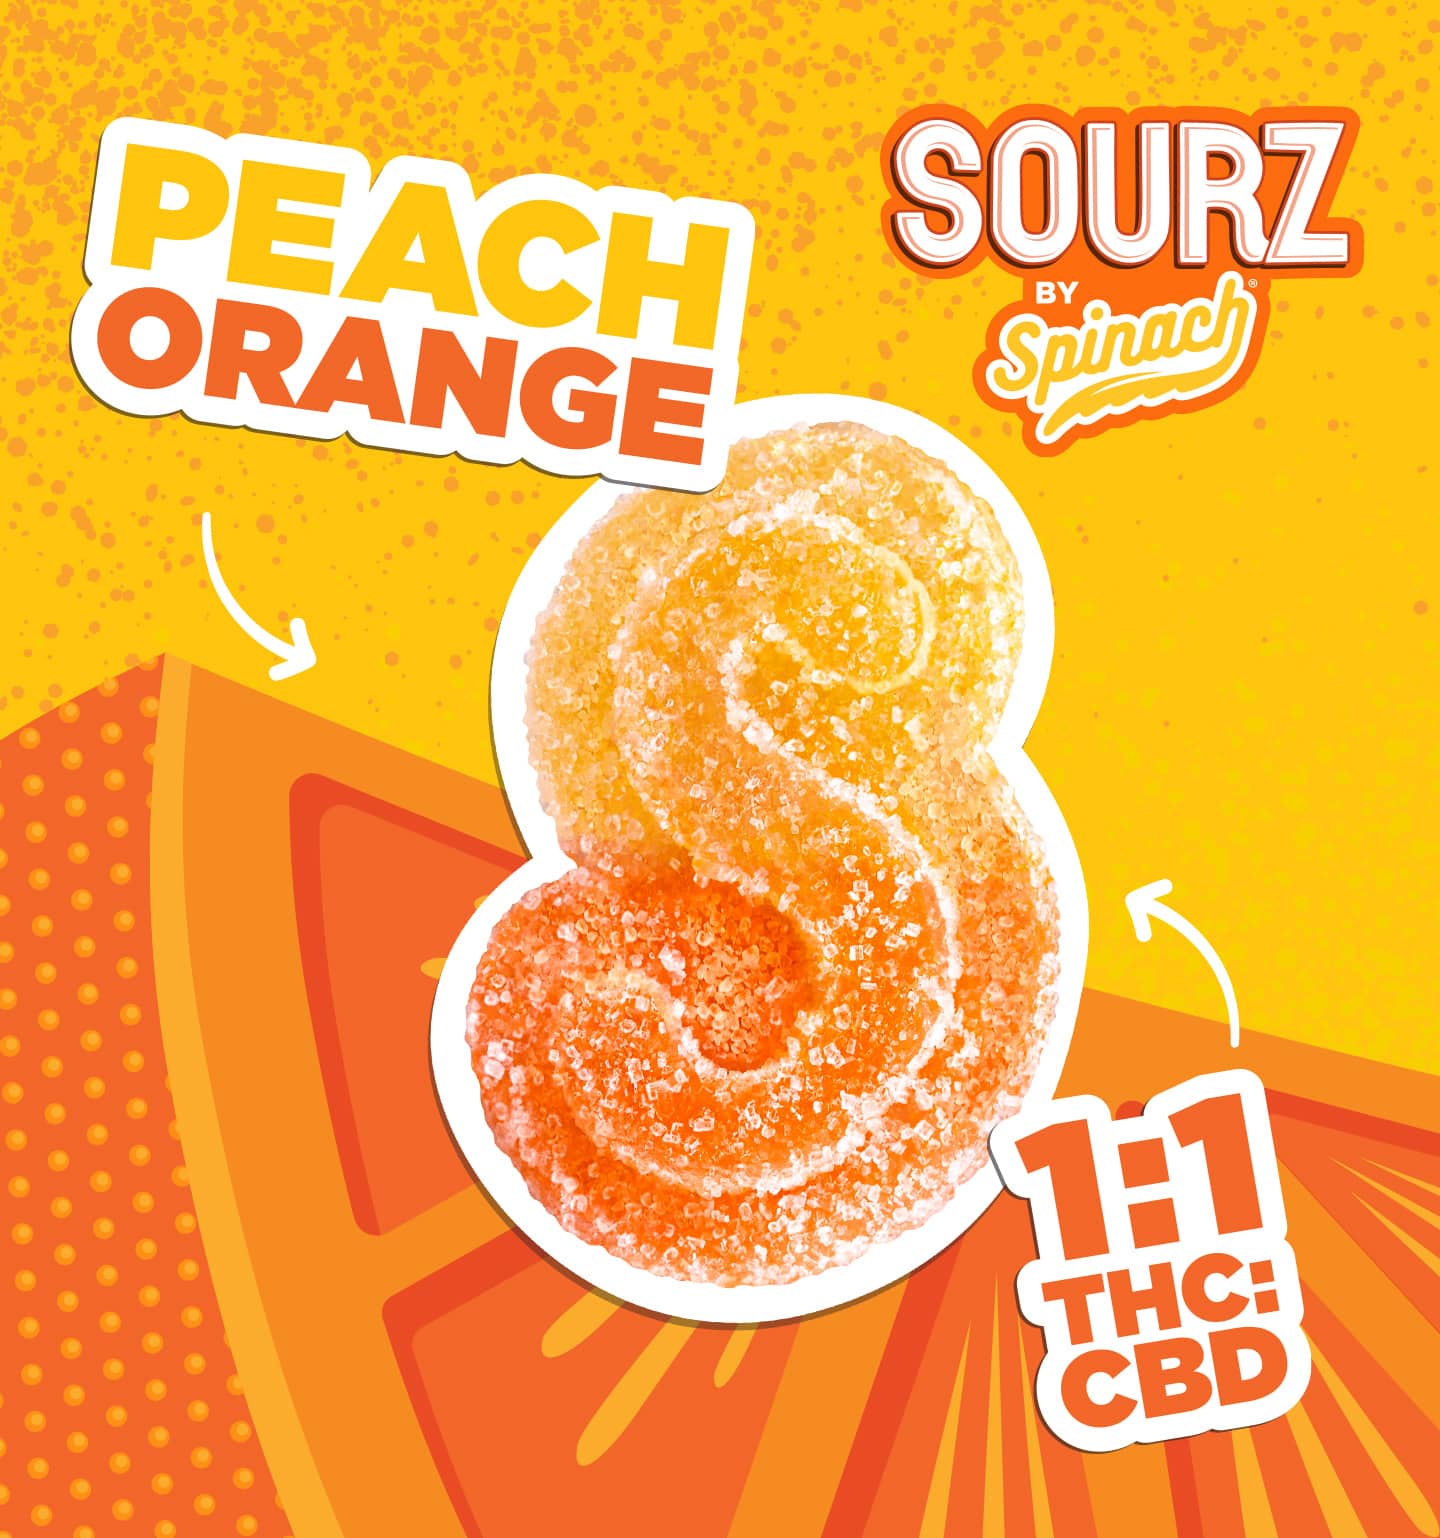 Peach Orange edible + Bold & Juicy